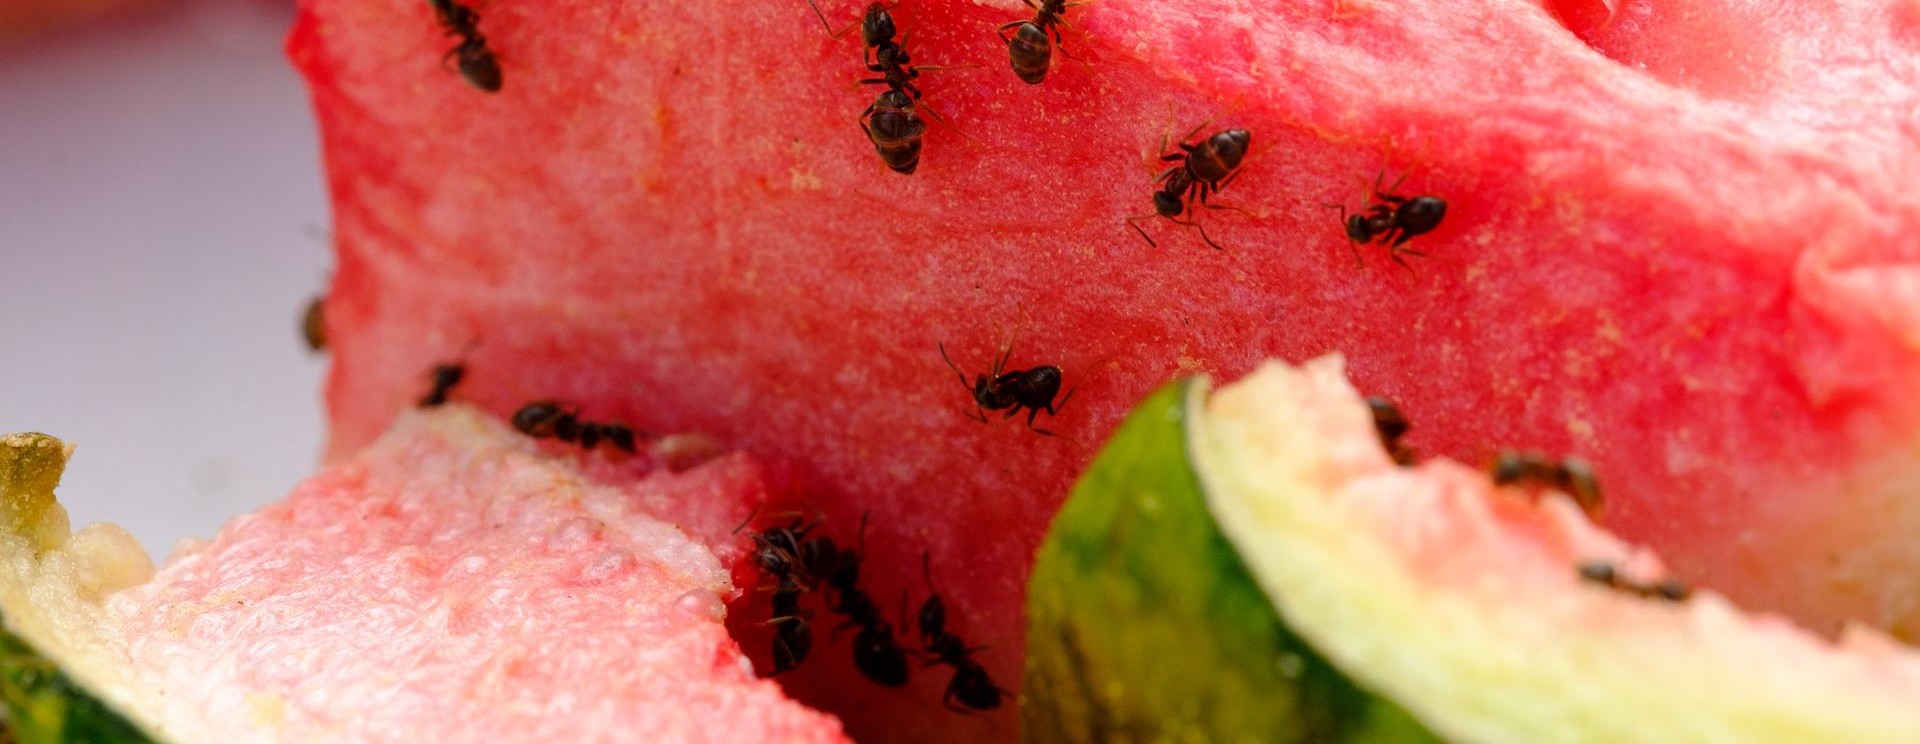 ants on melon